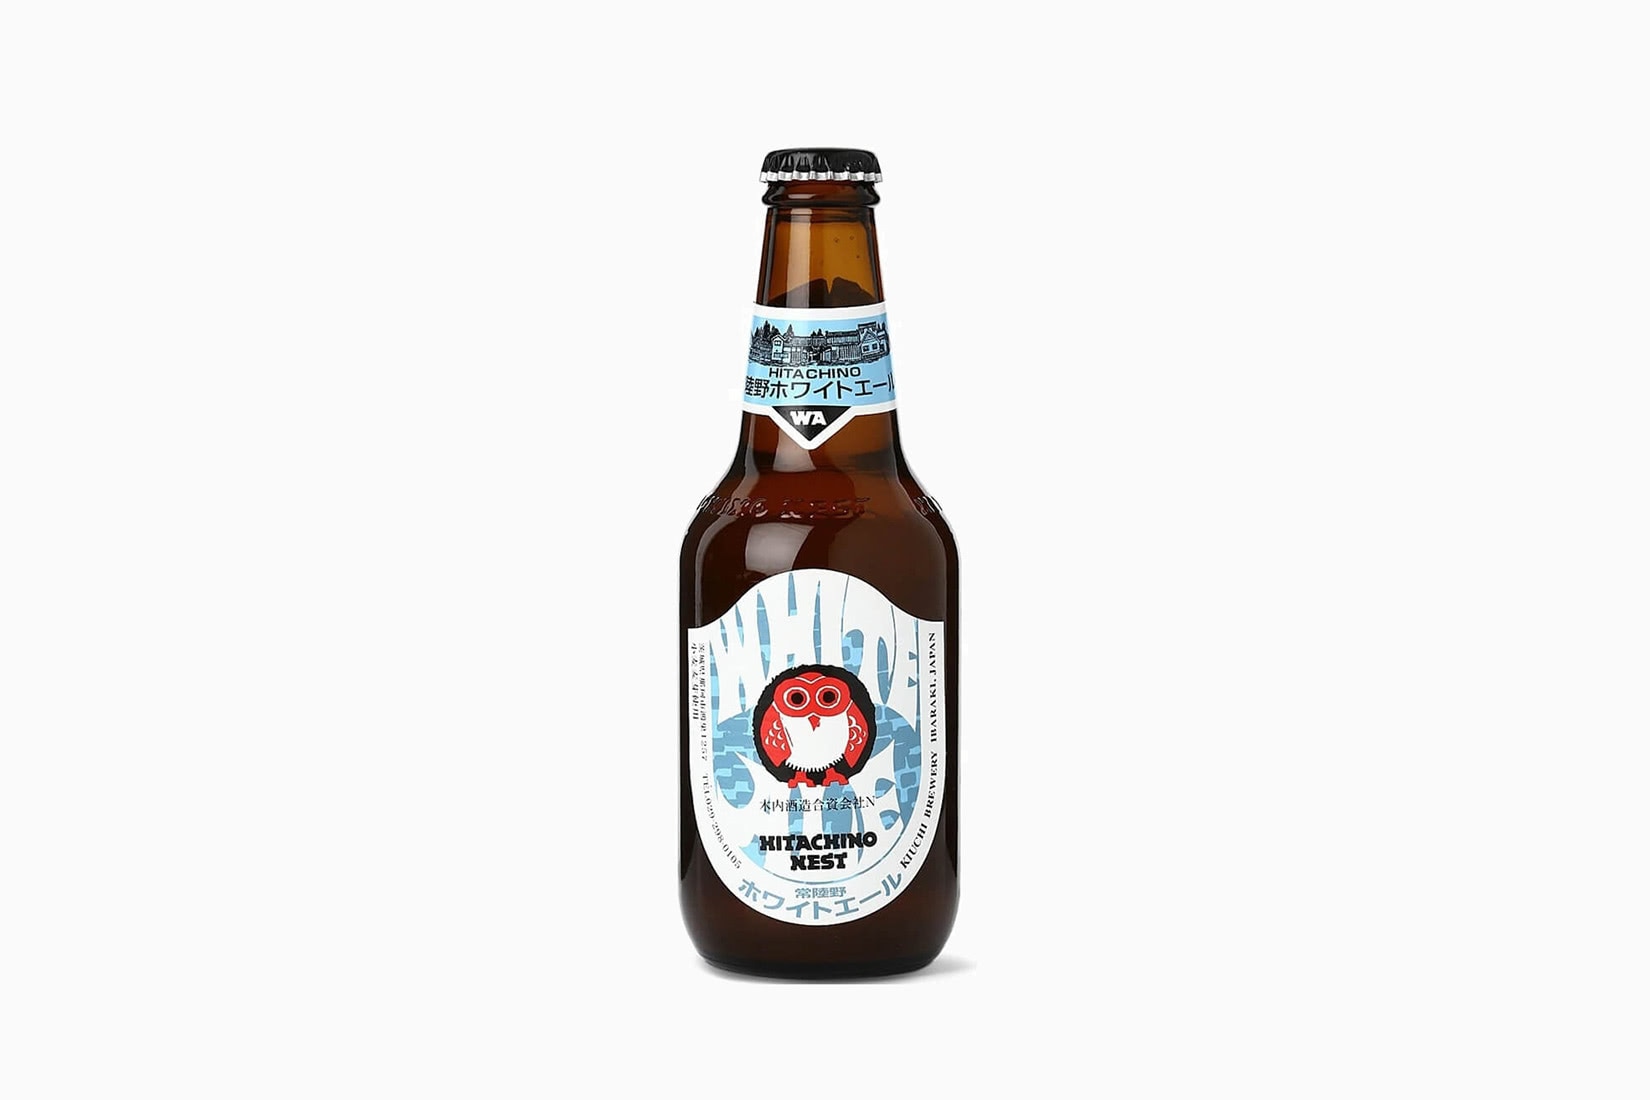 best beer brands hitachino nest white ale - Luxe Digital